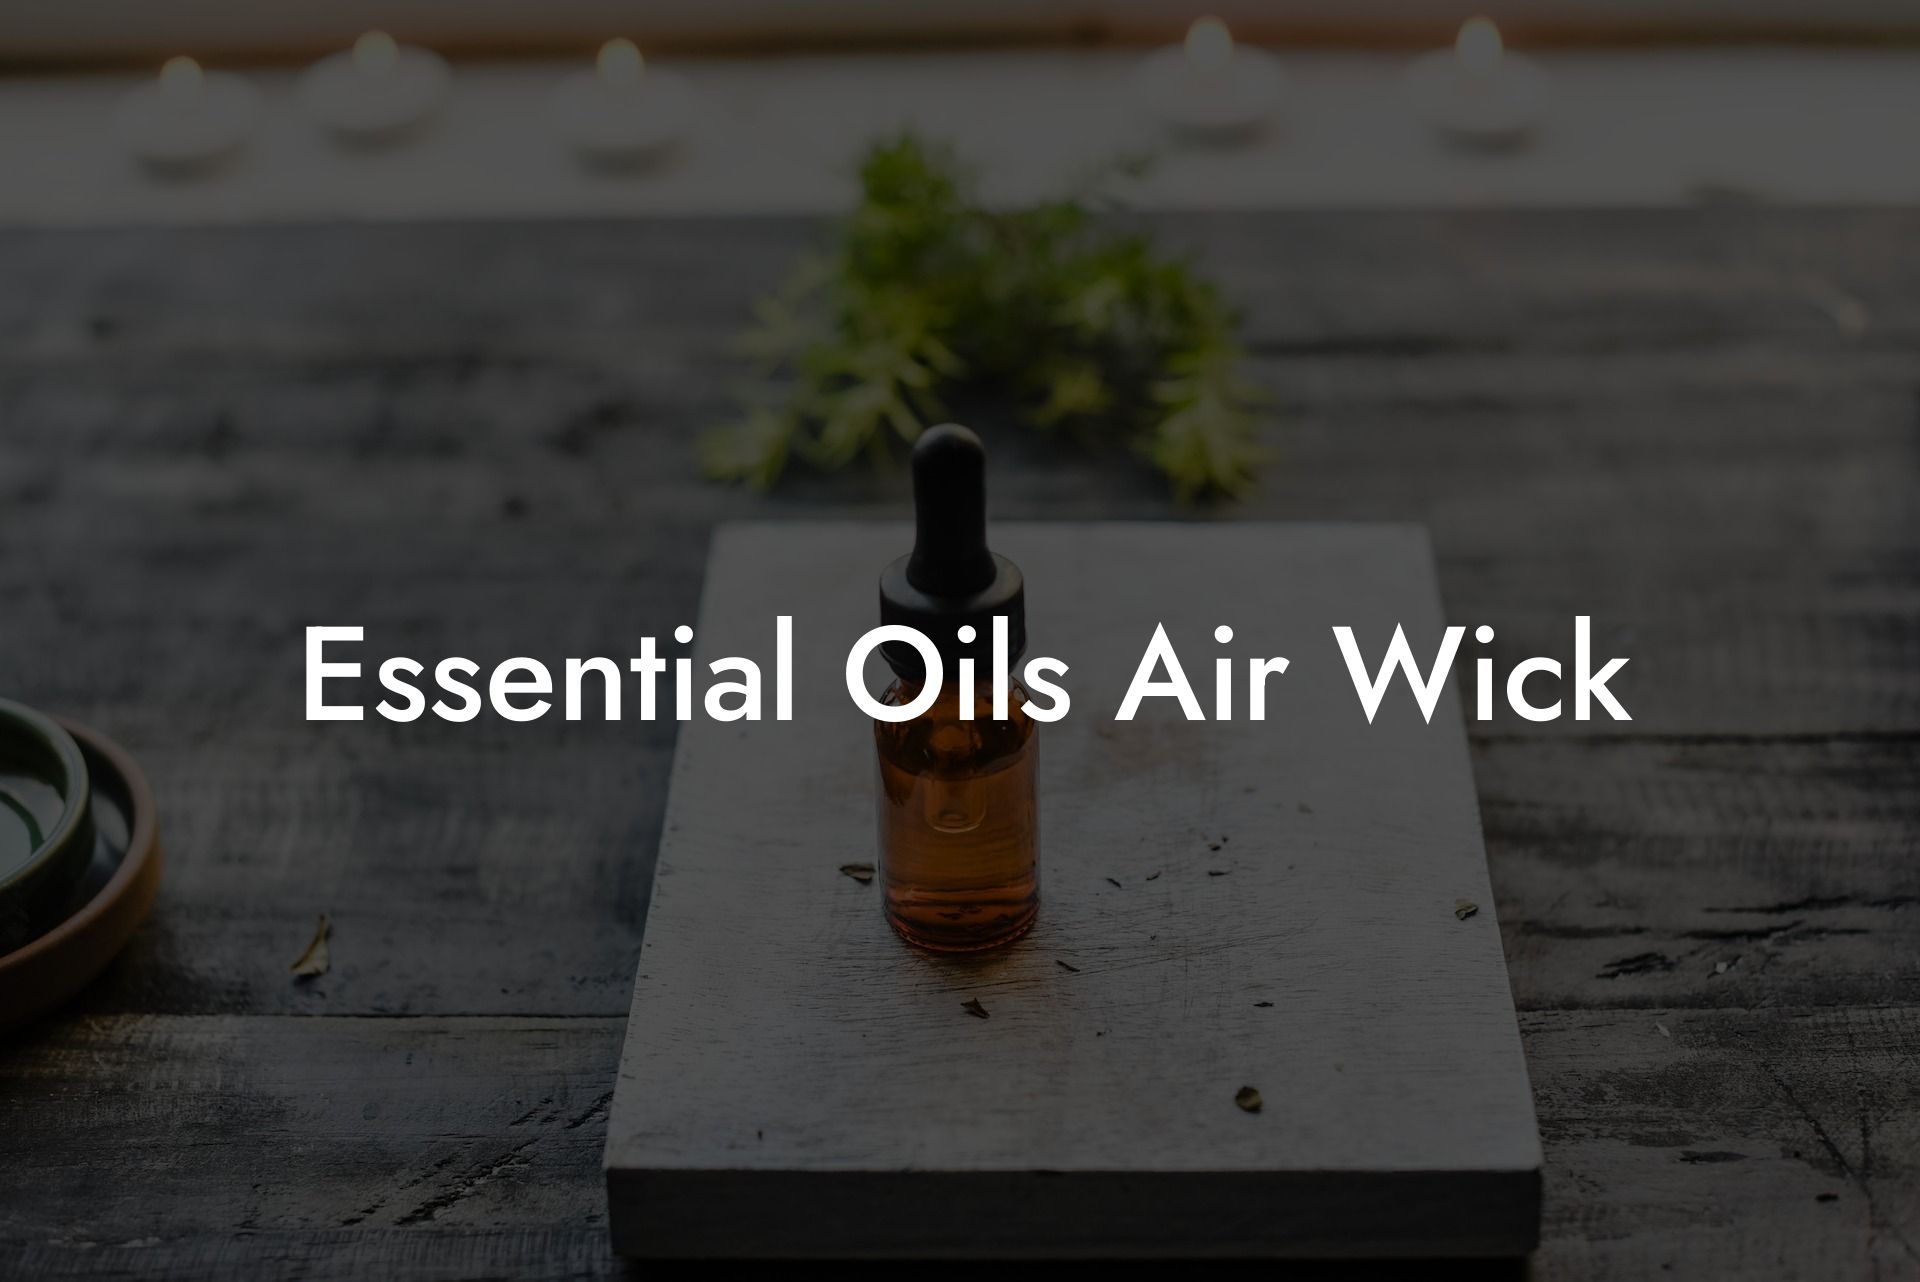 Essential Oils Air Wick